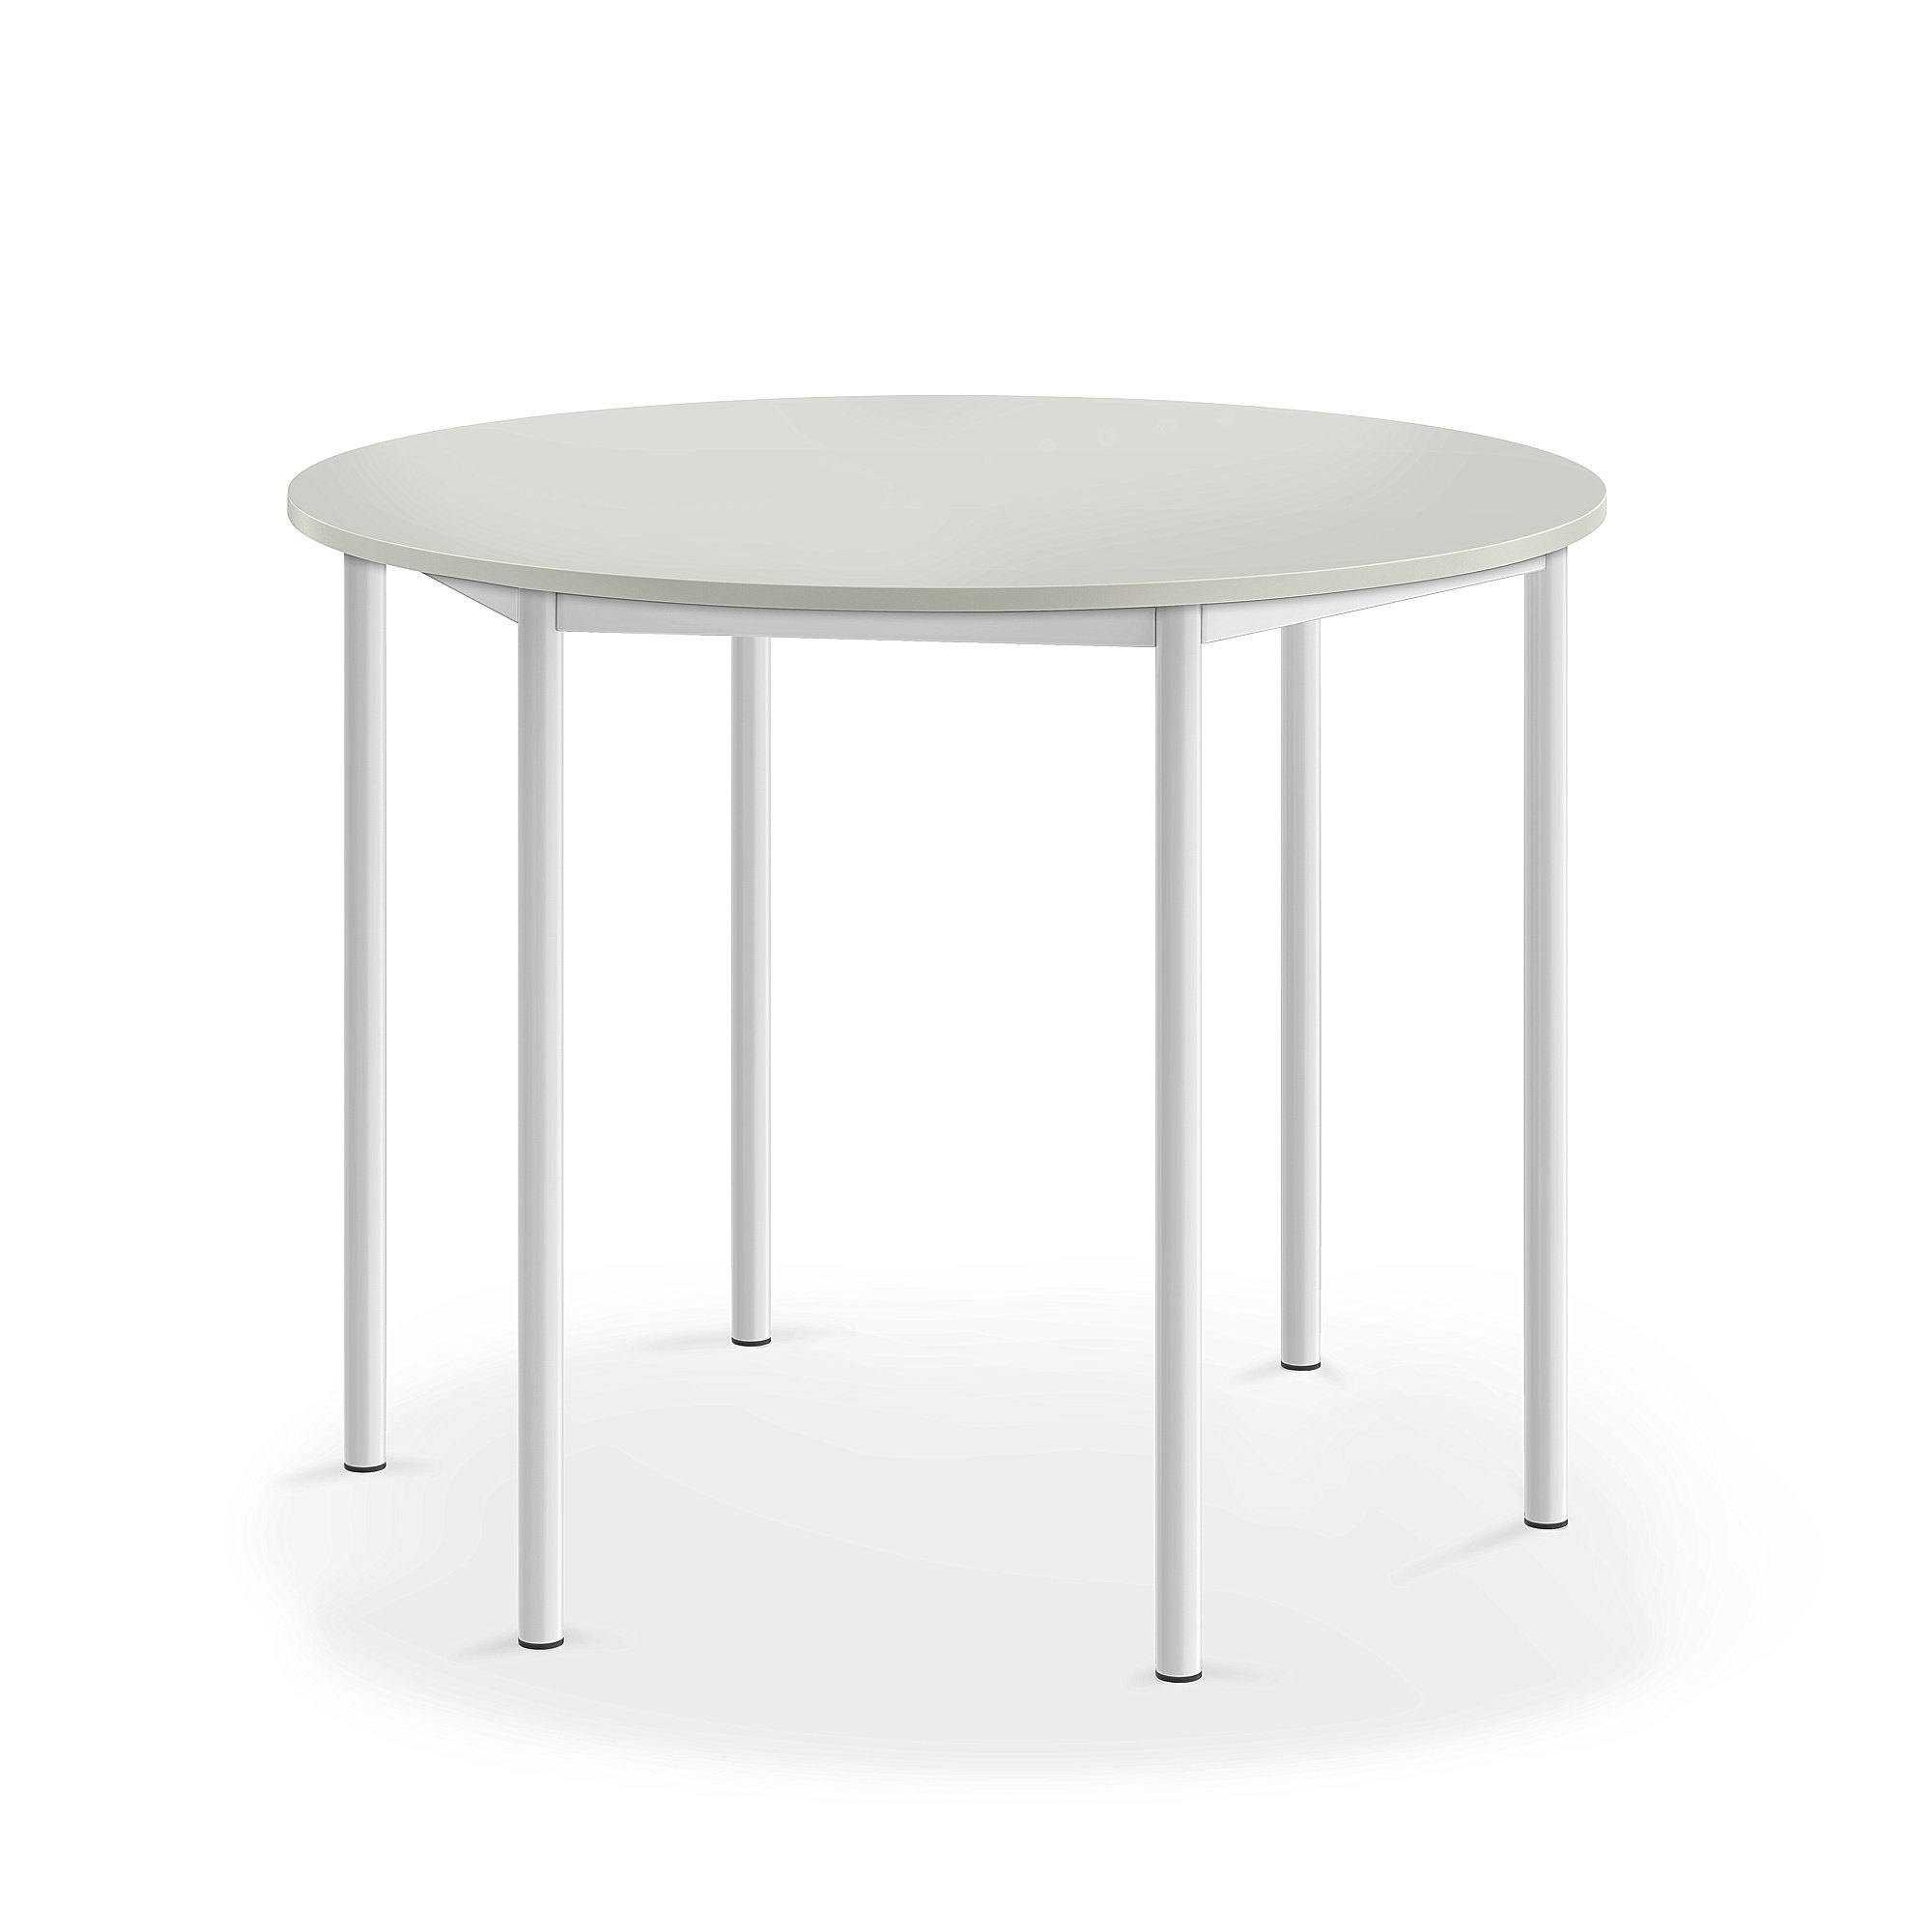 Stůl BORÅS, Ø1200x900 mm, bílé nohy, HPL deska, šedá